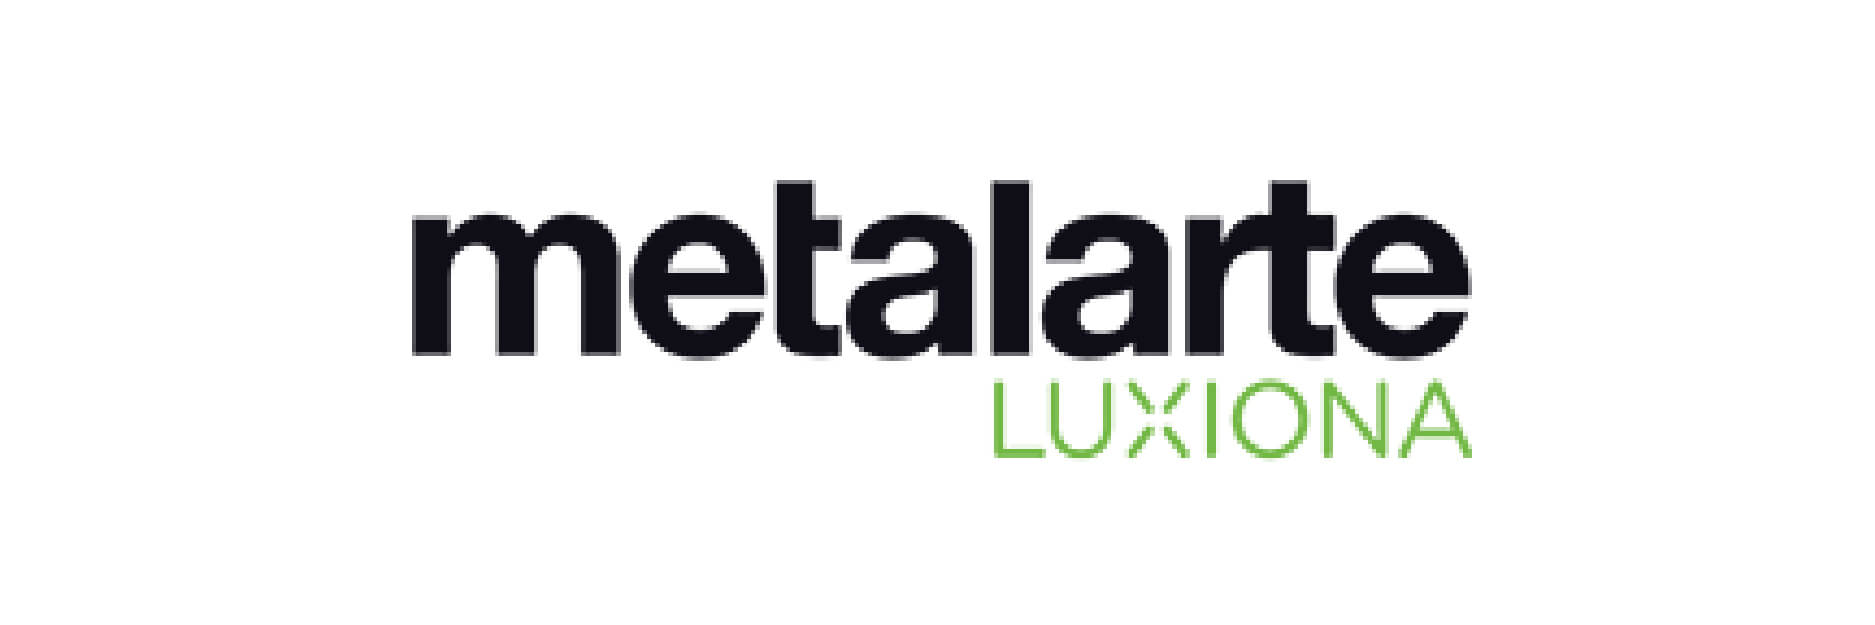 Metalarte Logo